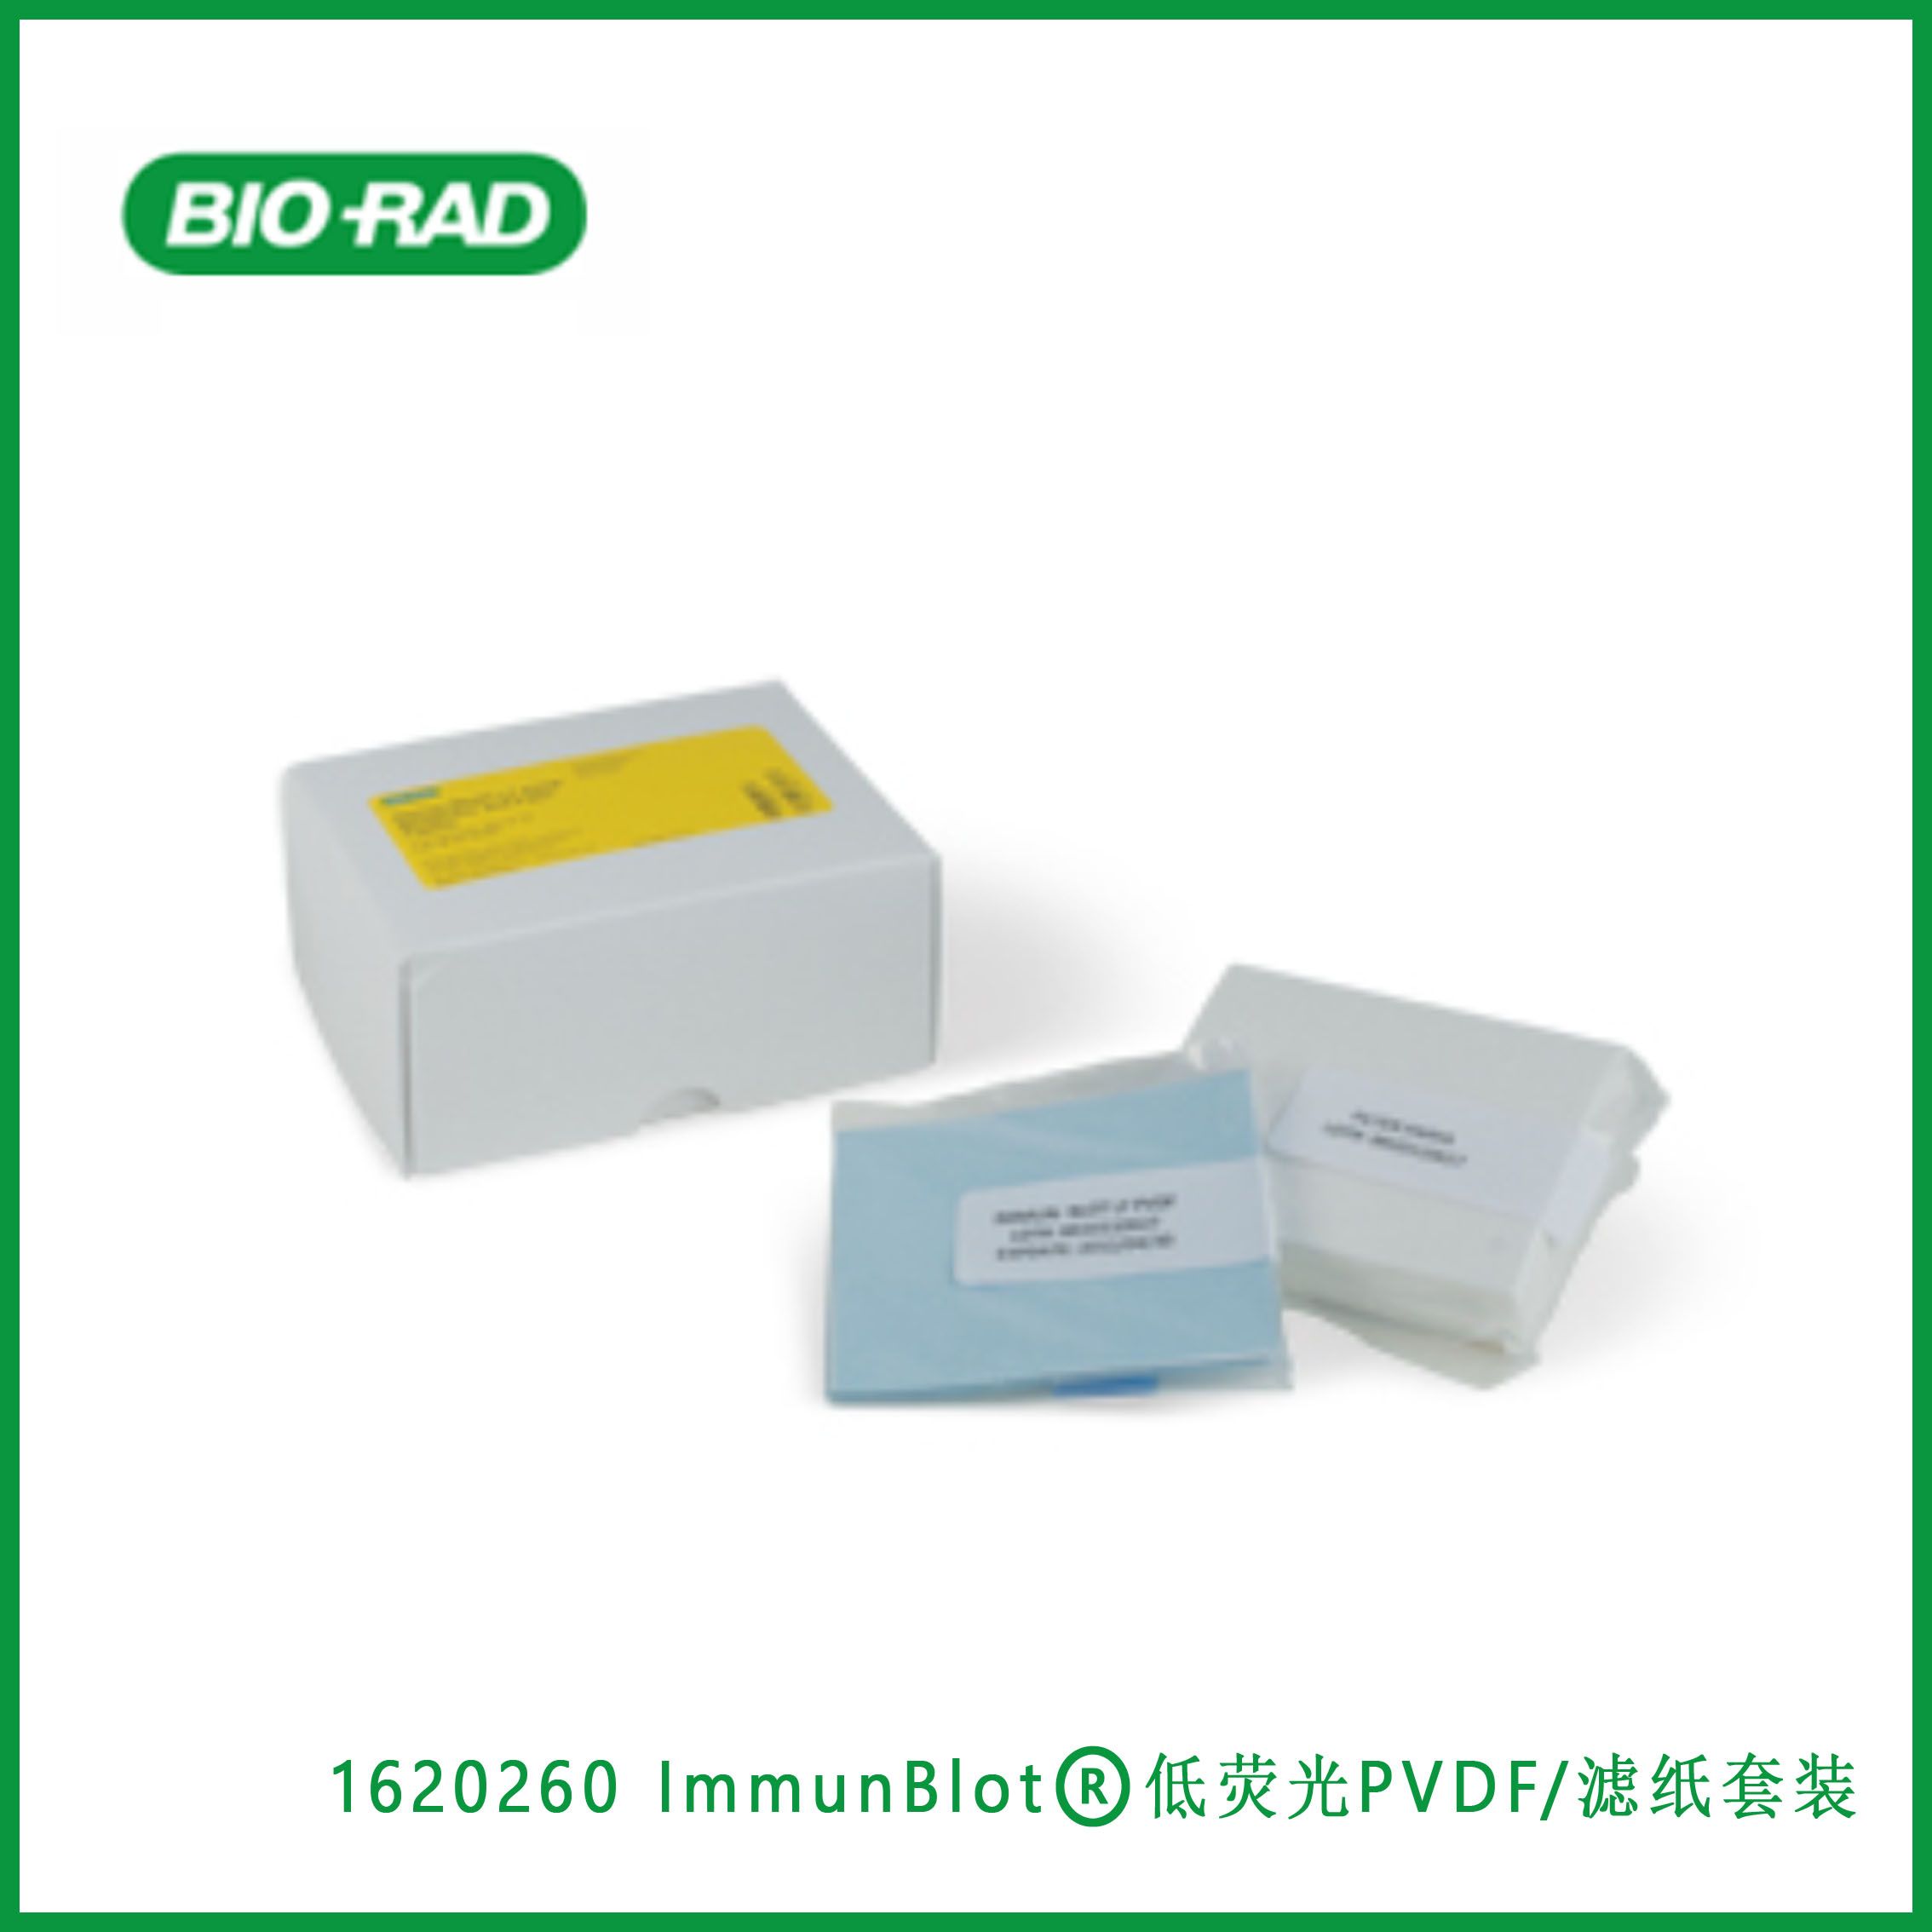 伯乐Bio-Rad1620260 Immun-Blot® Low Fluorescence PVDF/Filter Paper Sets，Immun Blot®低荧光PVDF/滤纸套装，现货